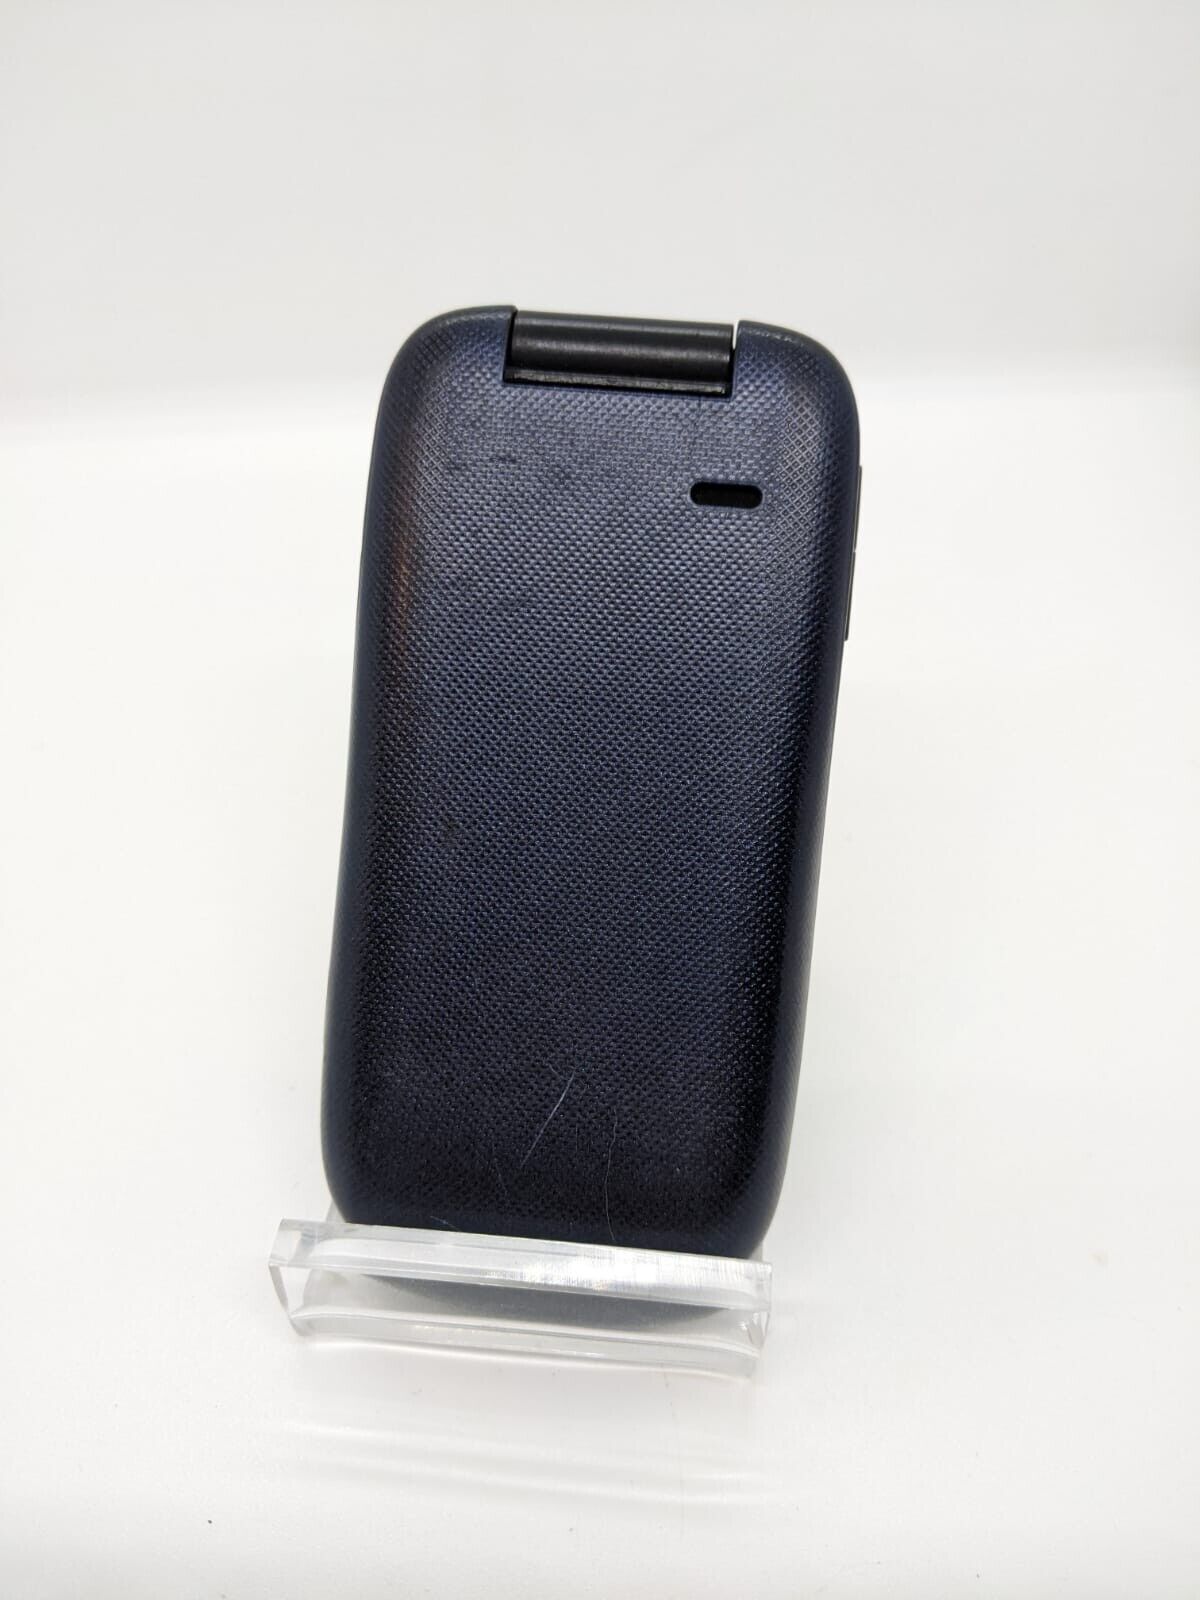 Kyocera Cadence Cellular 4G LTE Flip Phone Verizon Blue S2720 FOR PARTS